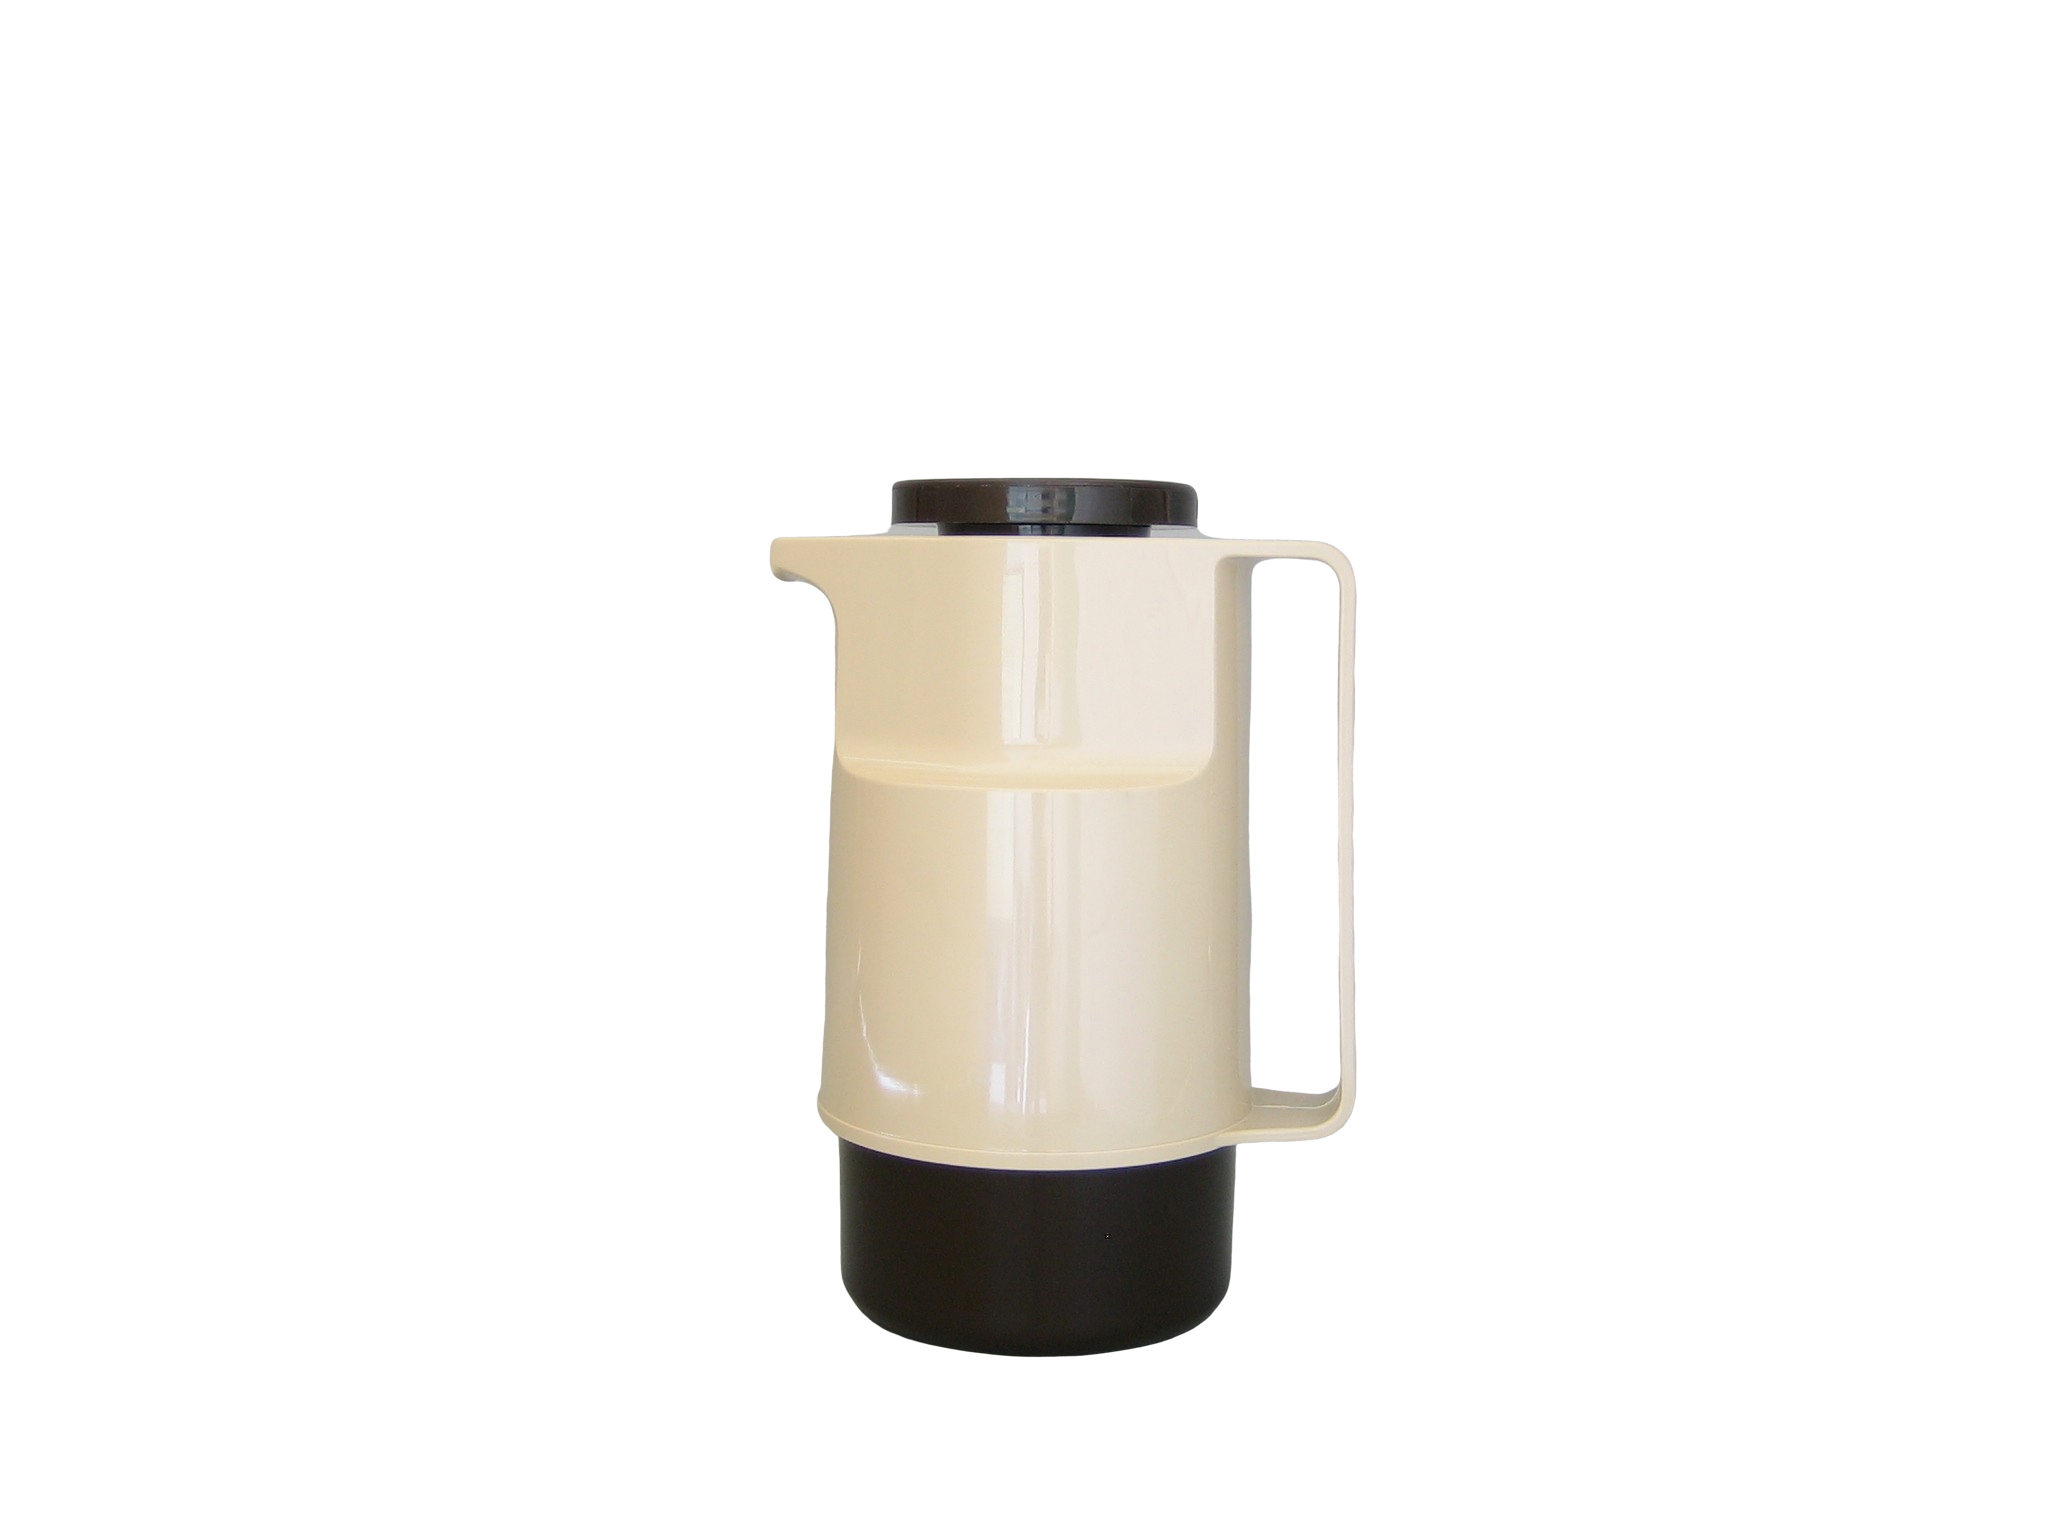 206-1030 - Vacuum carafe ABS beige/brown 0.60 L - Isobel